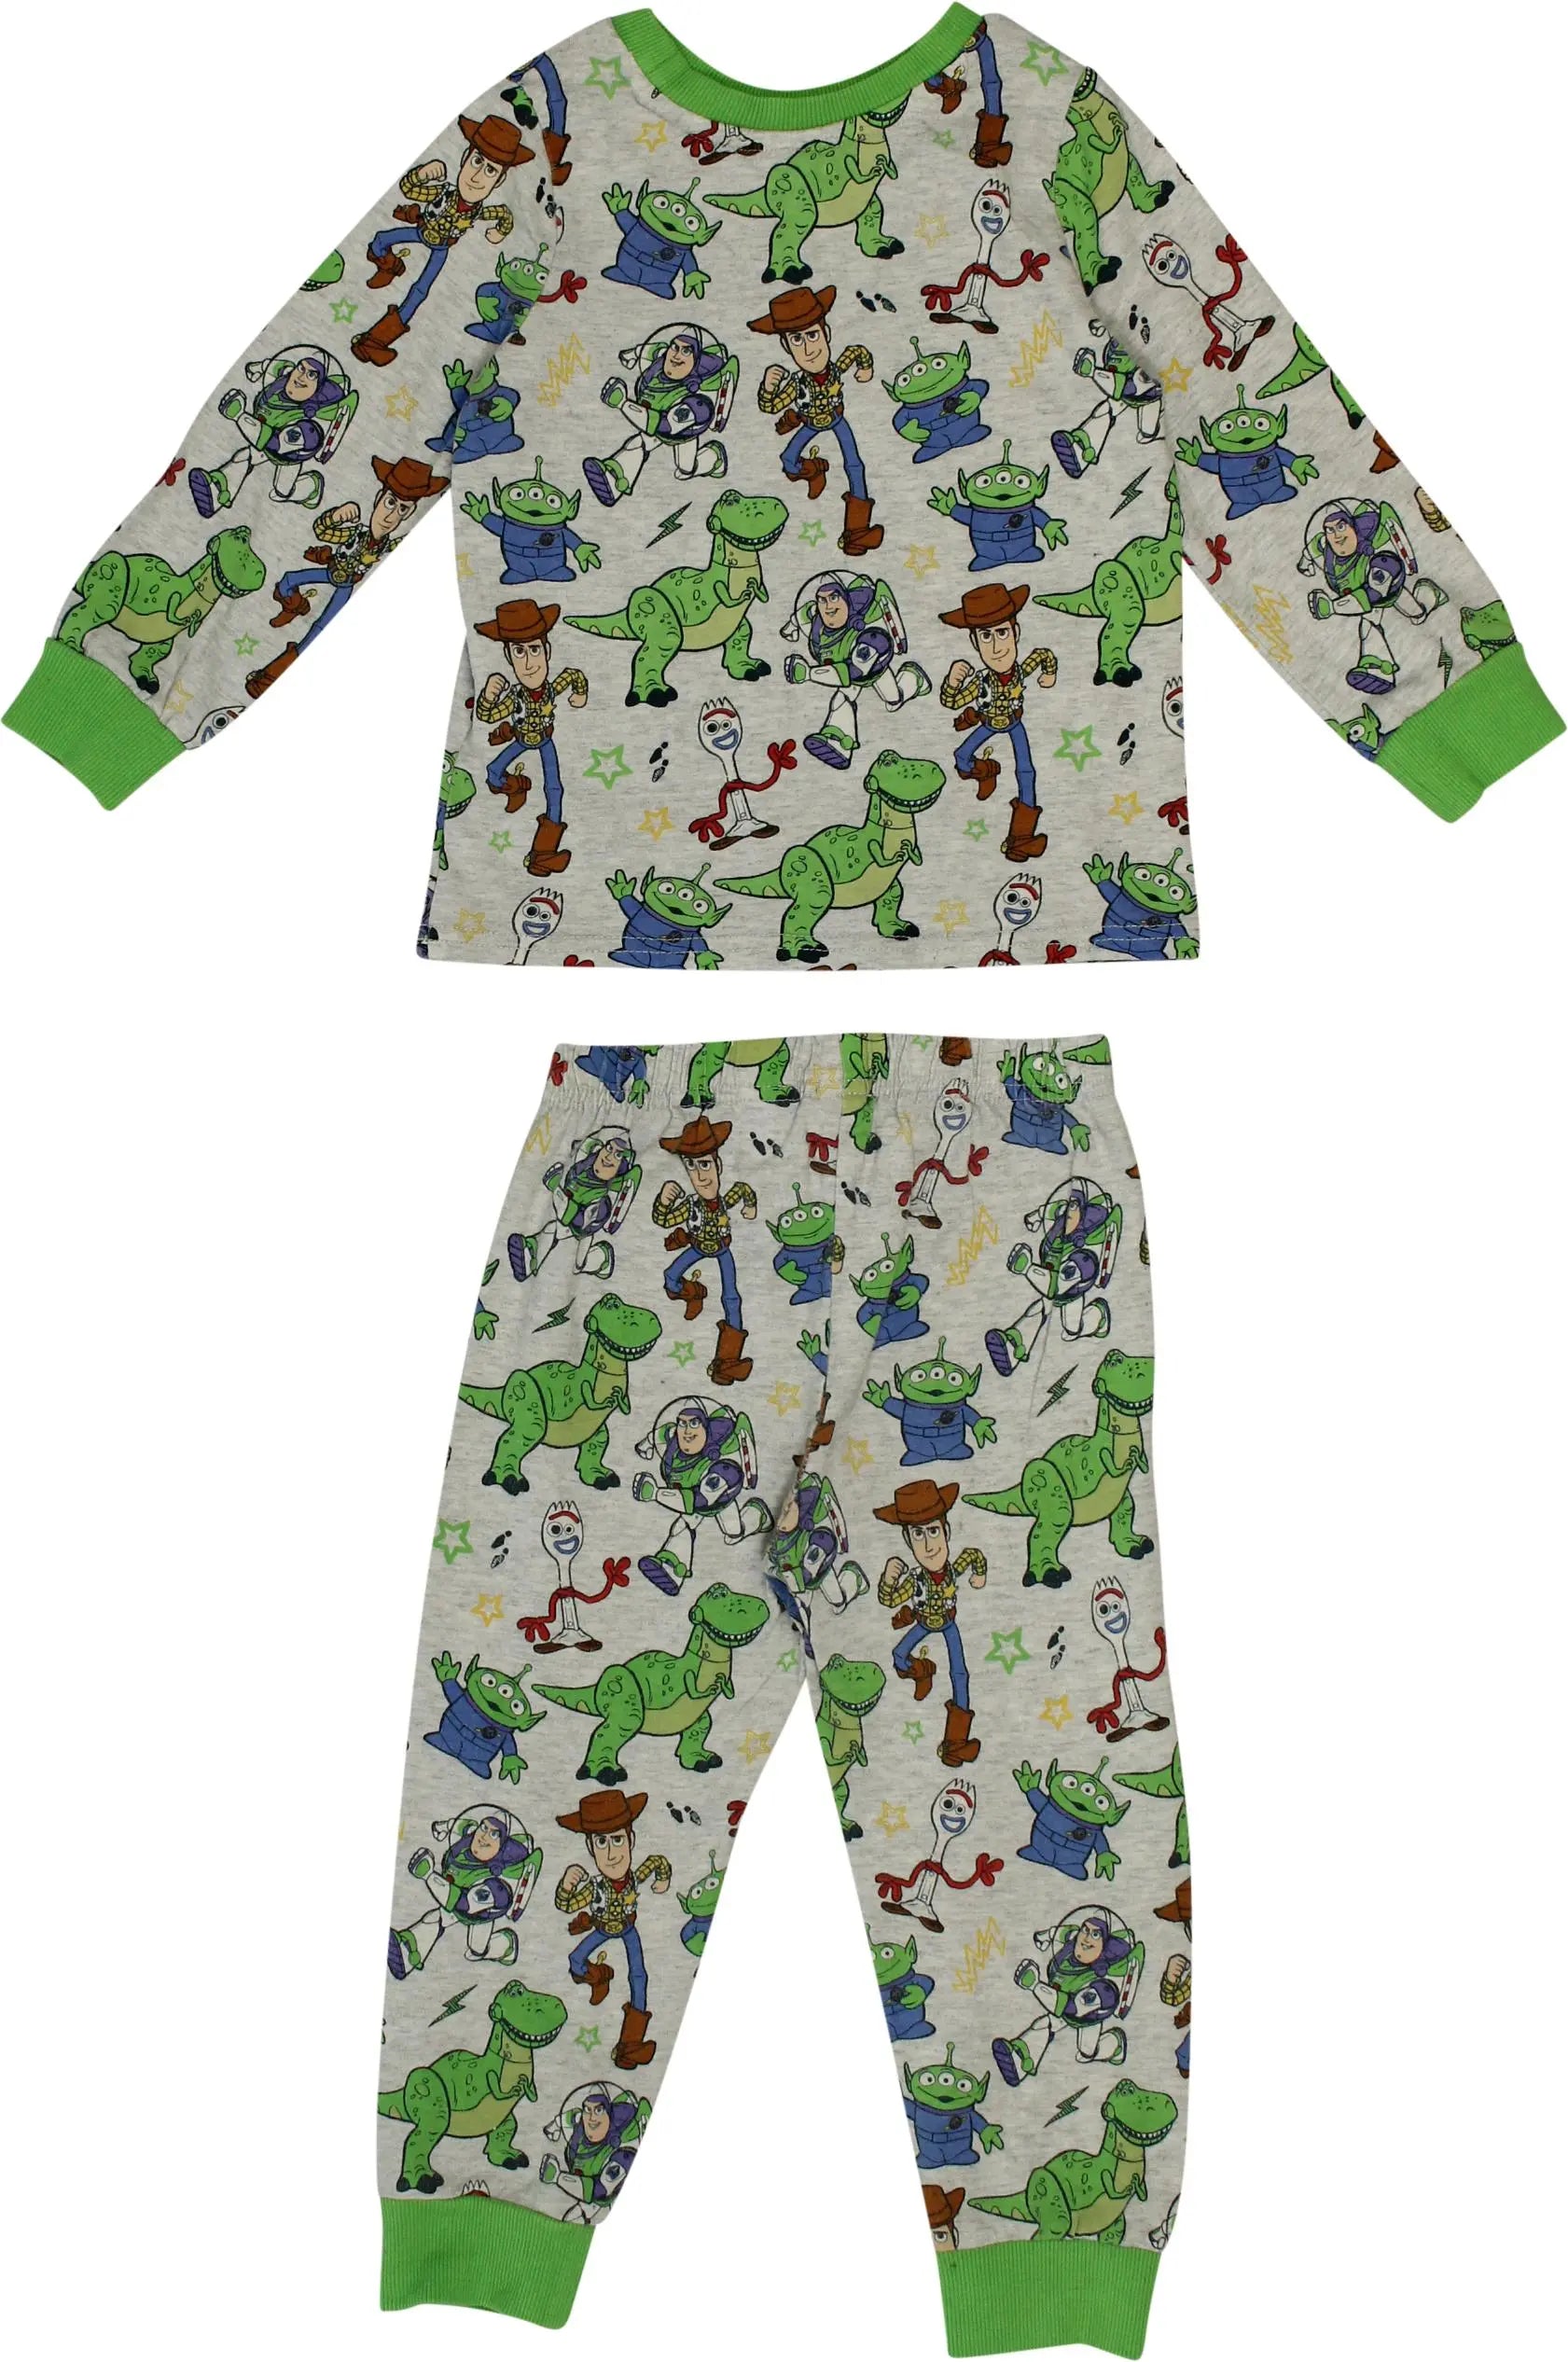 Disney - Pyjama Set- ThriftTale.com - Vintage and second handclothing